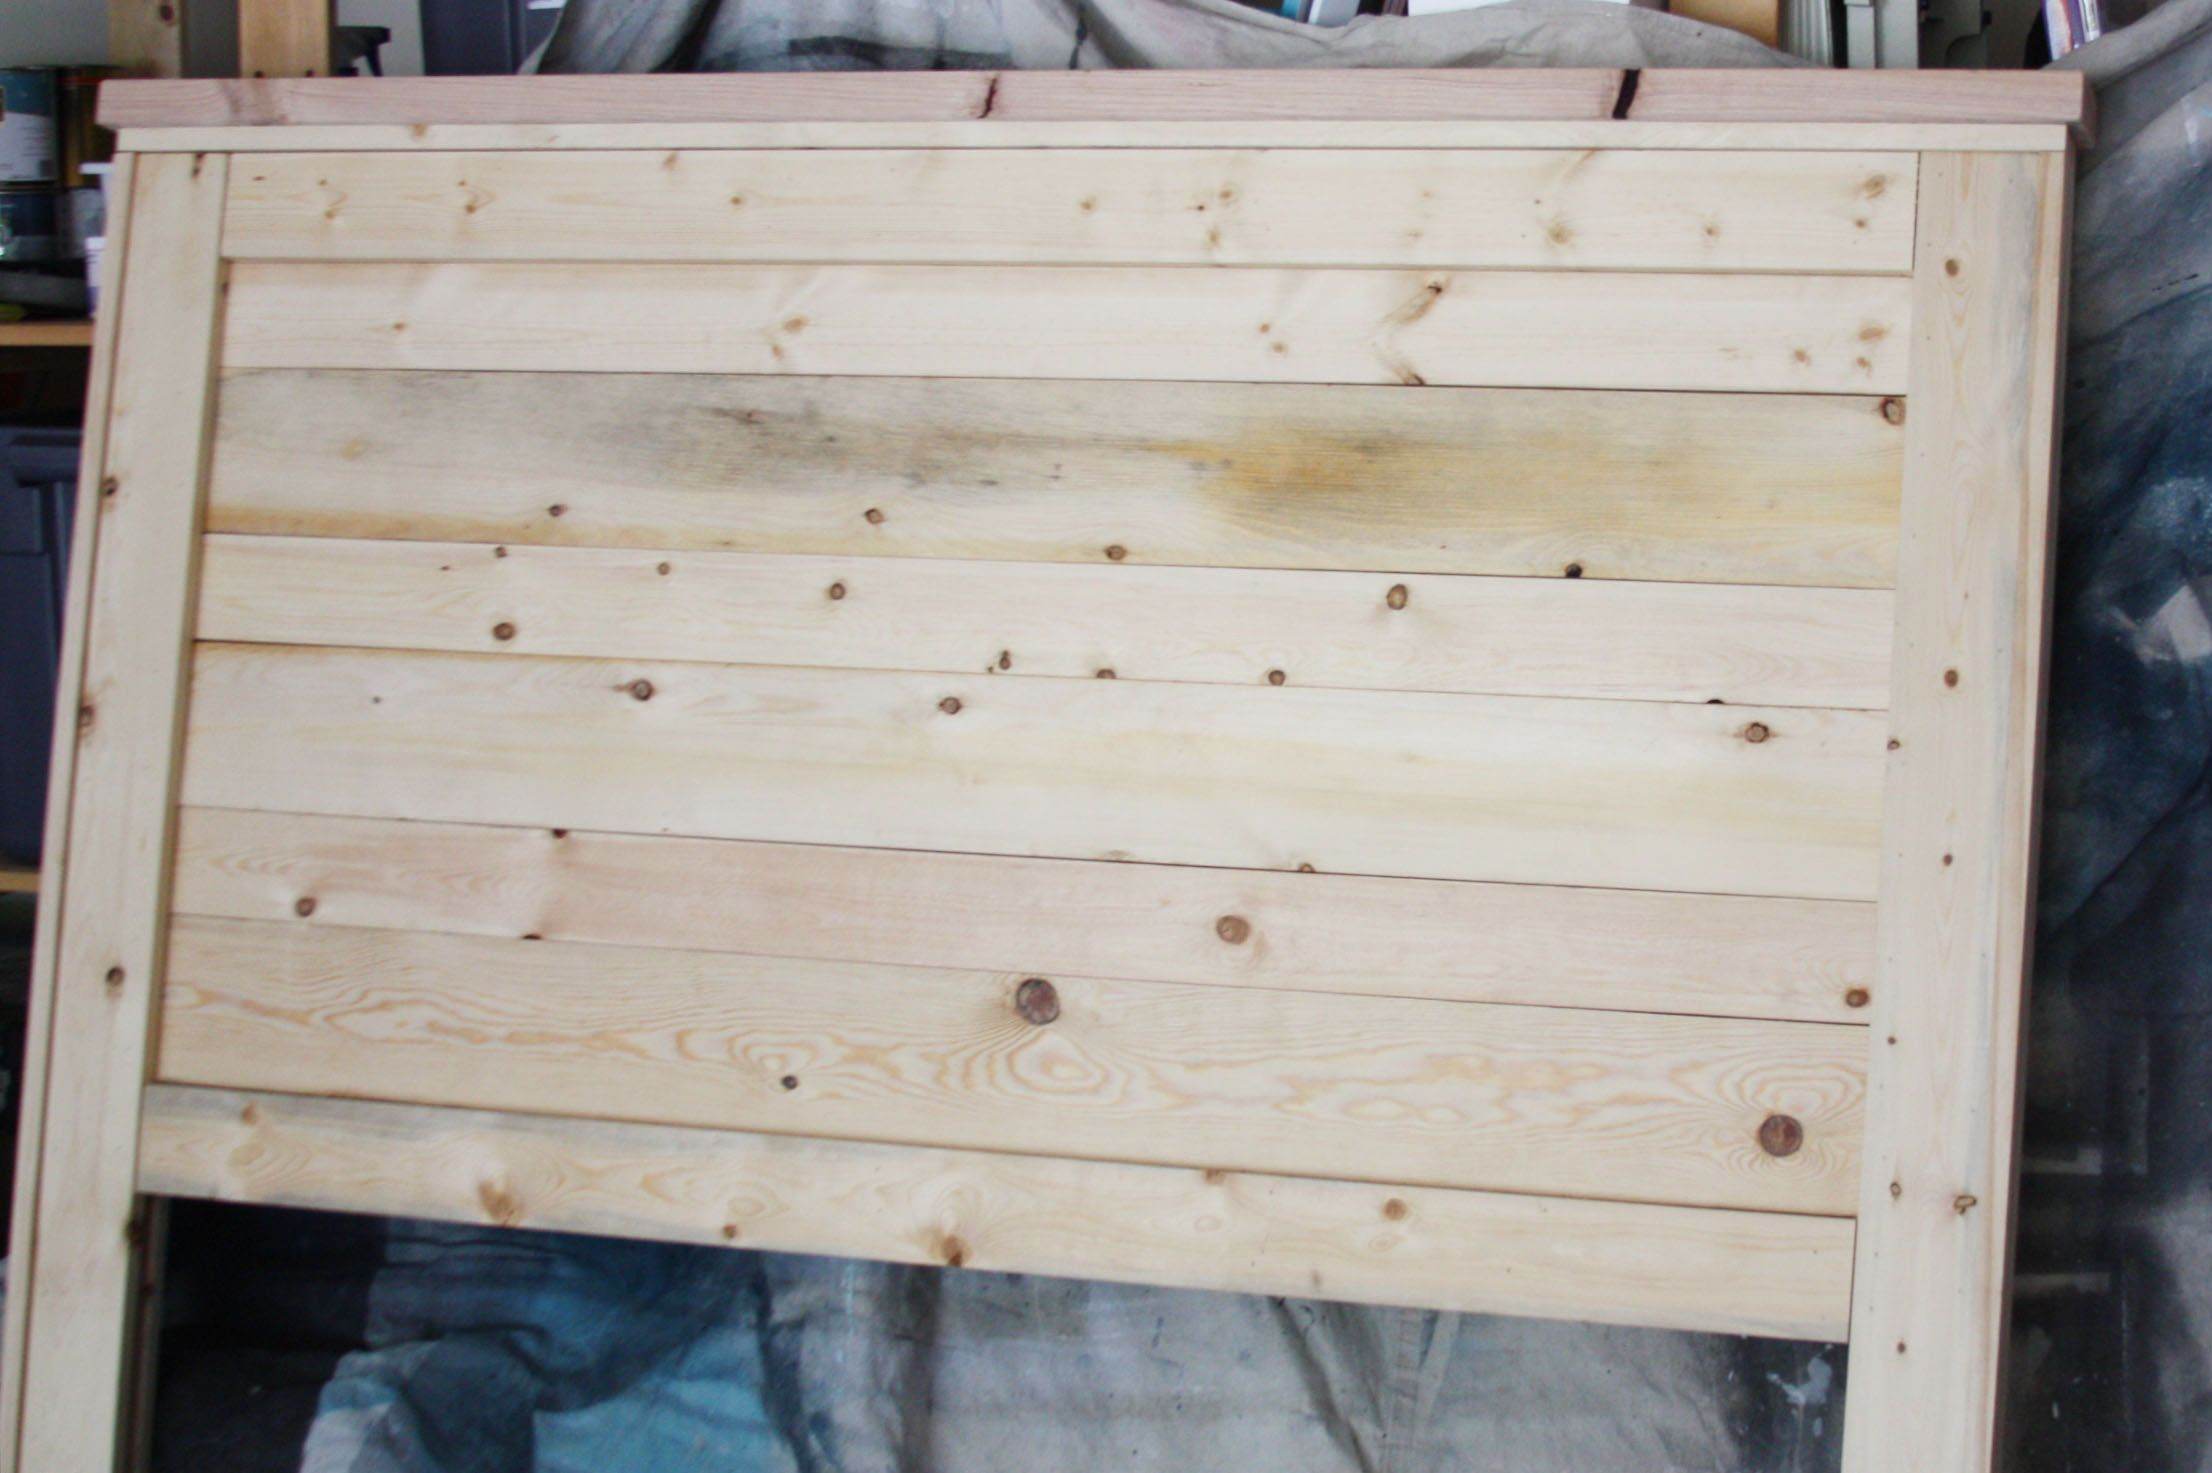 Best ideas about DIY Wood Headboard Plans
. Save or Pin DIY wood headboard [DIY Home] Now.